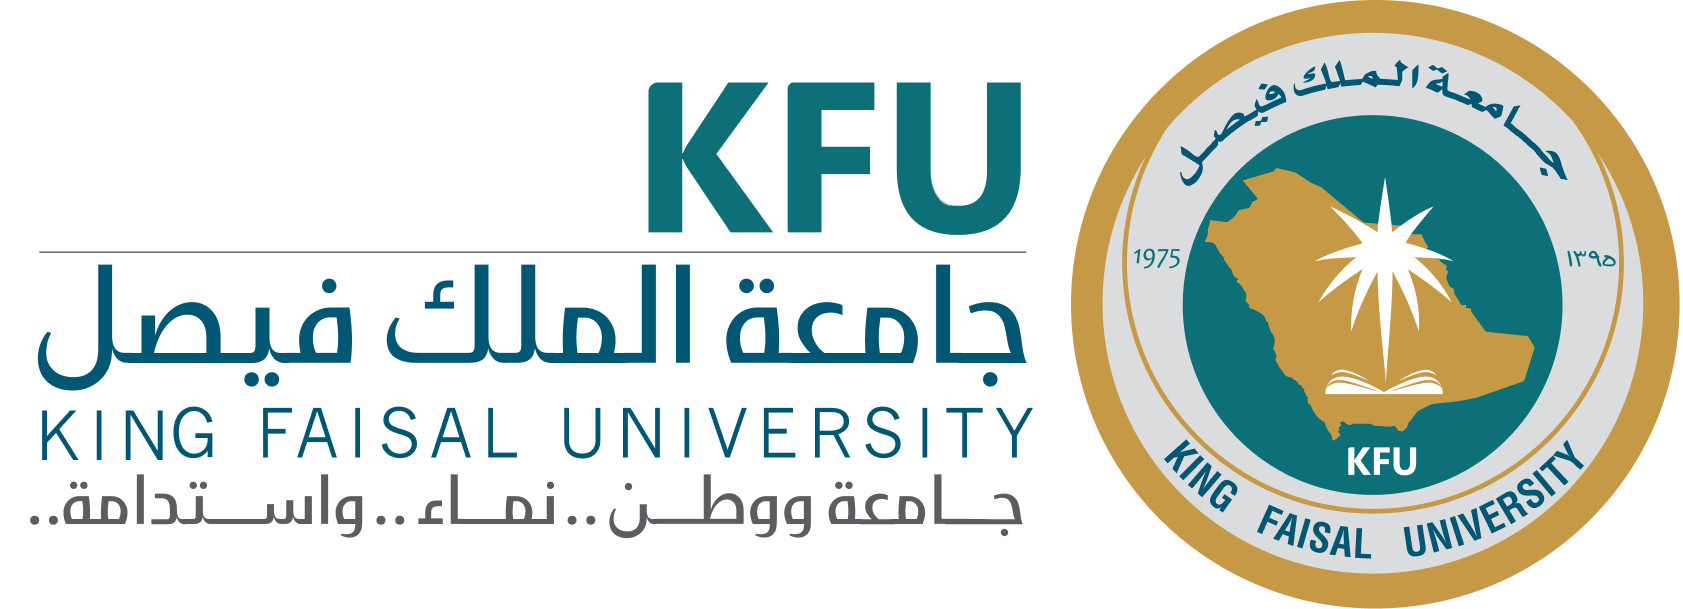 KFU Logo